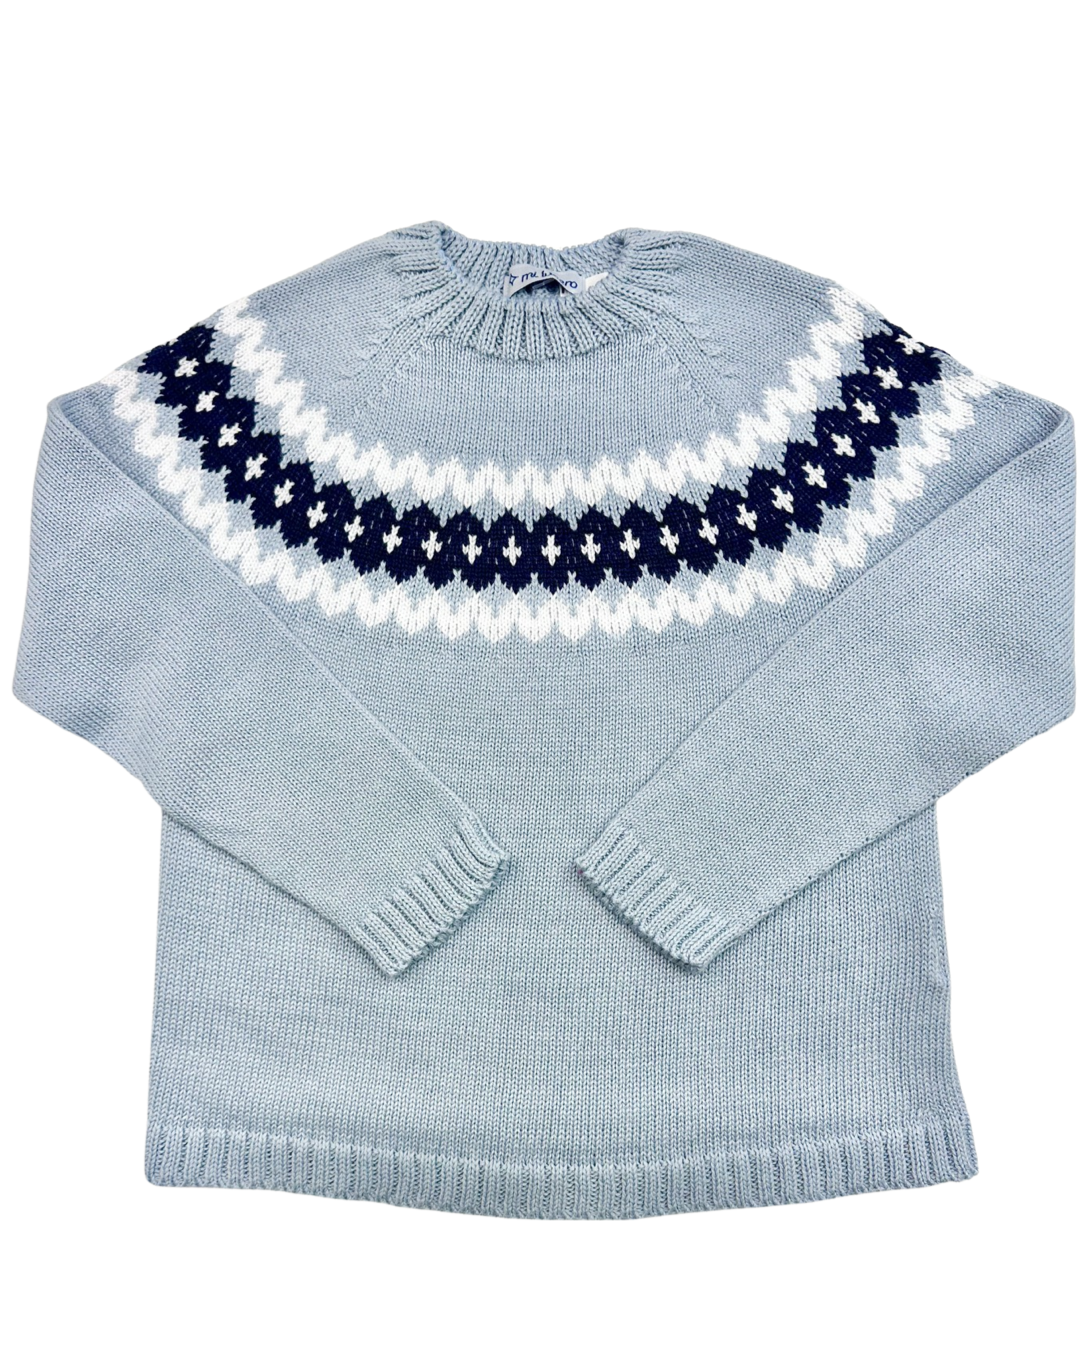 Fair Isle Crew Sweater - Blue/Navy/White (2T,3T,4T)